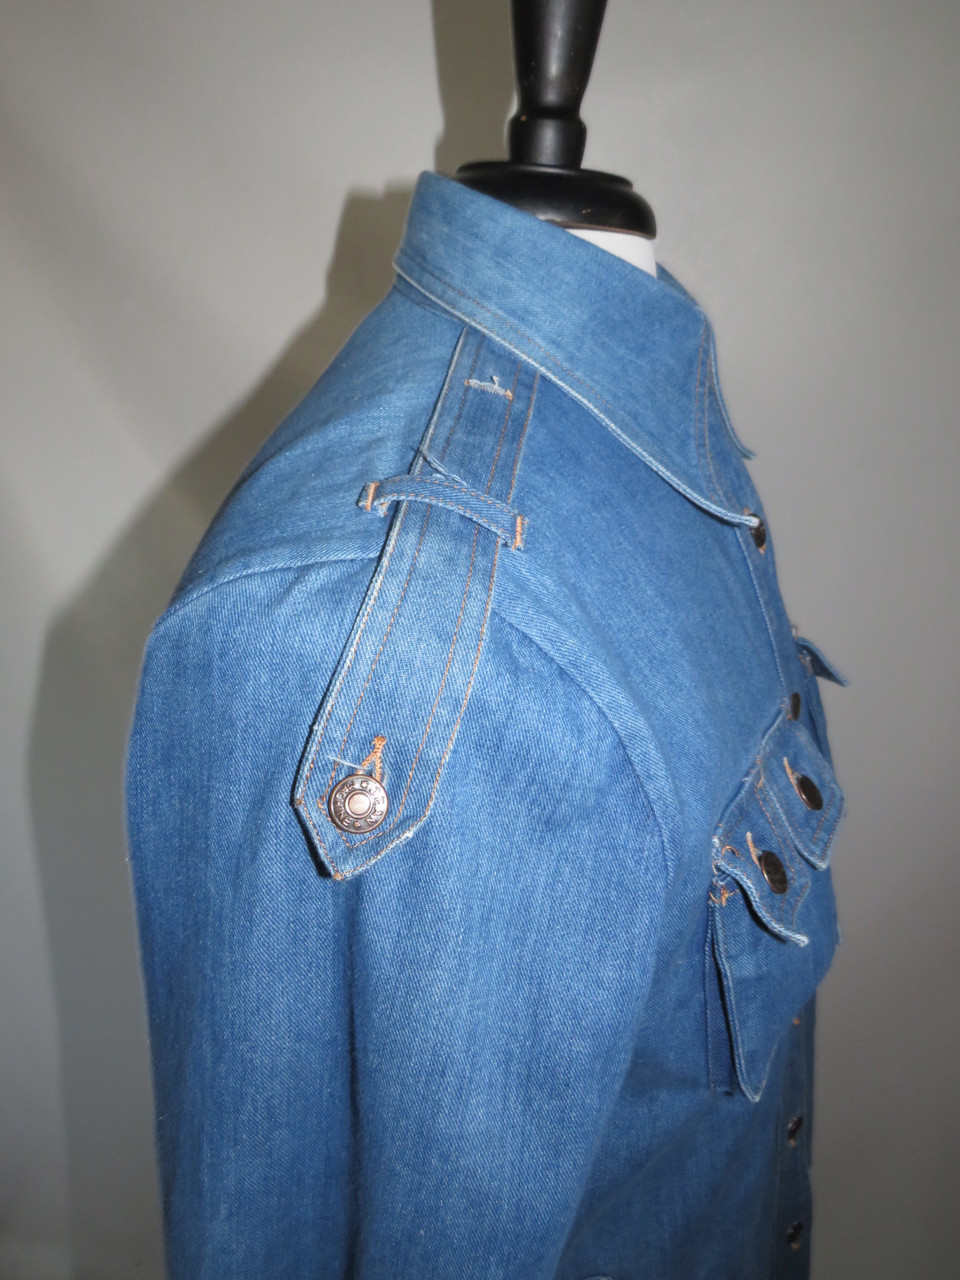 The Jean Machine Multi Pockets & Zippers Denim Jacket